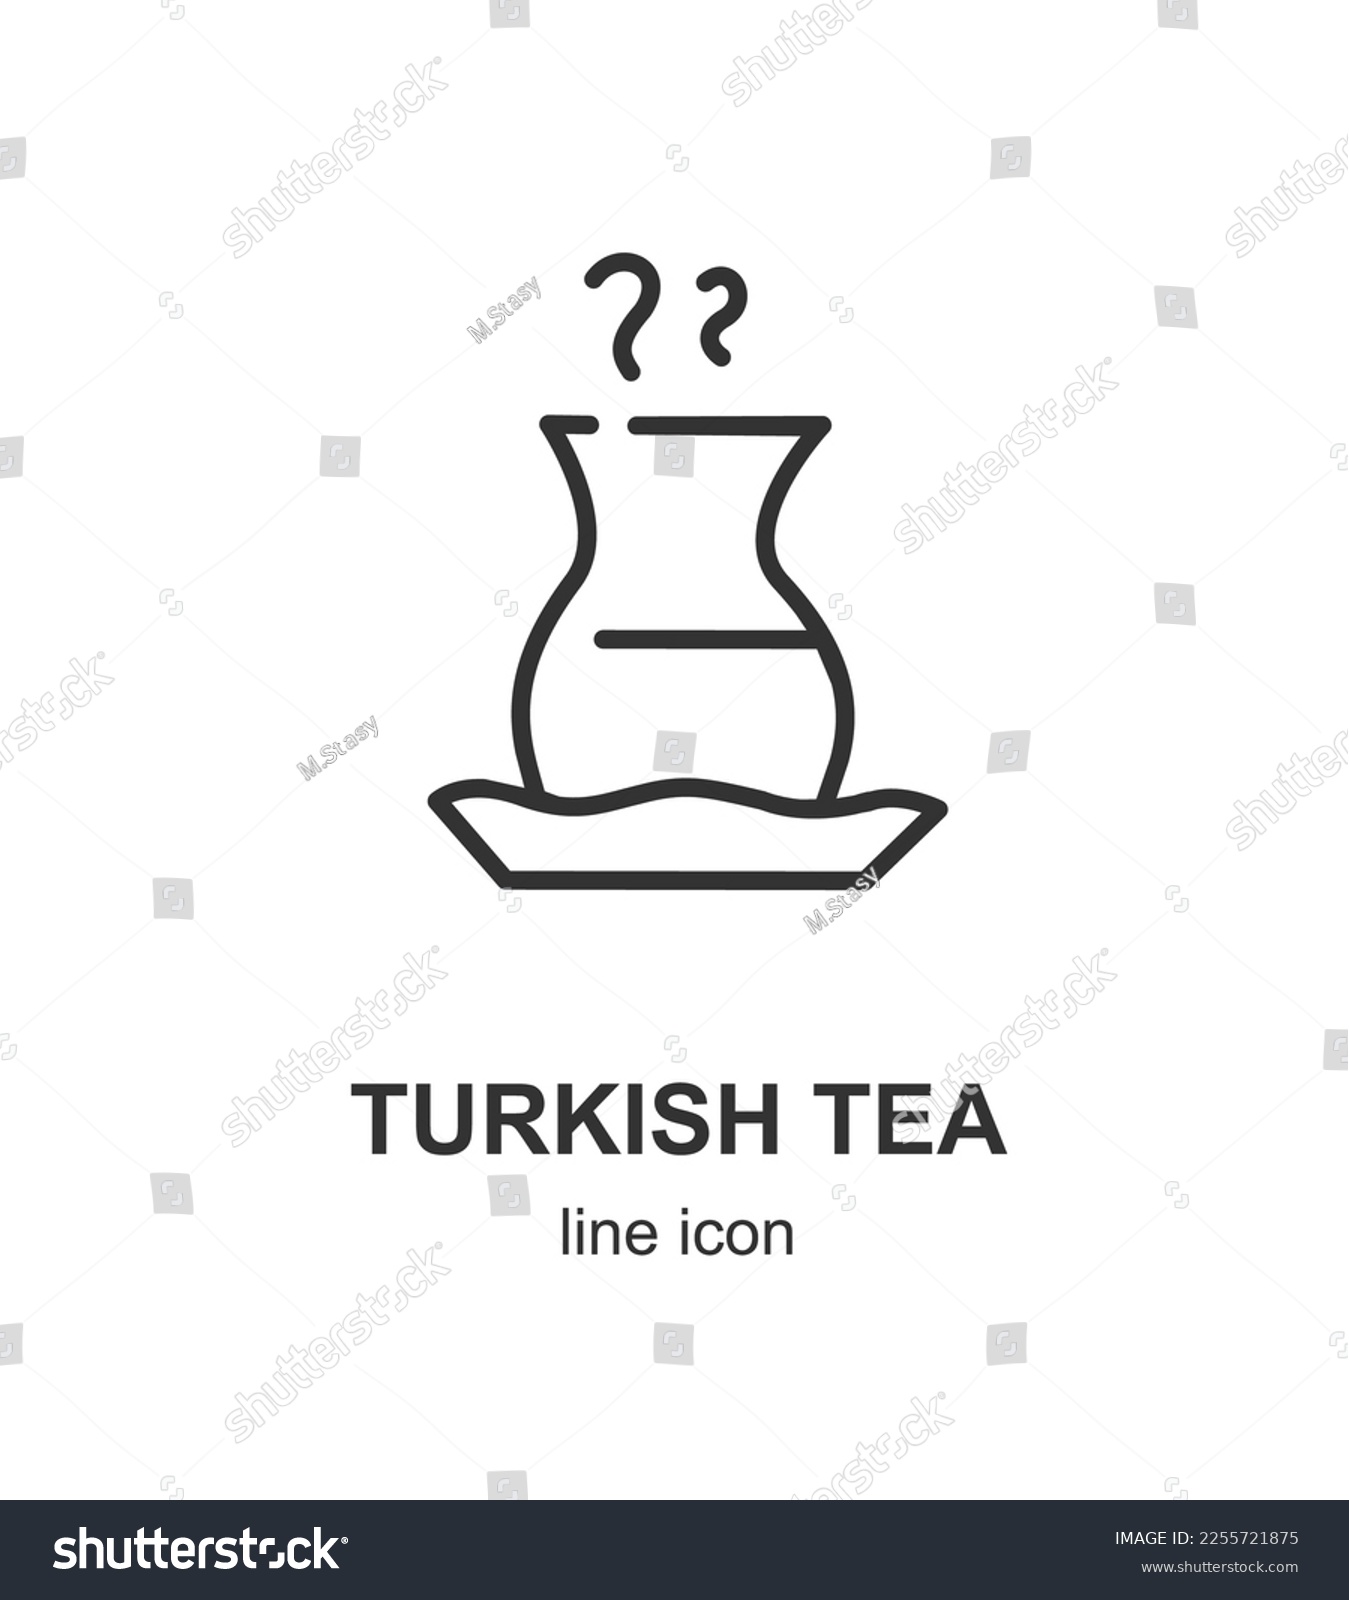 SVG of Turkish Tea Cup Sign Black Thin Line Icon Emblem Concept. Vector illustration of Traditional Glass Teacup svg